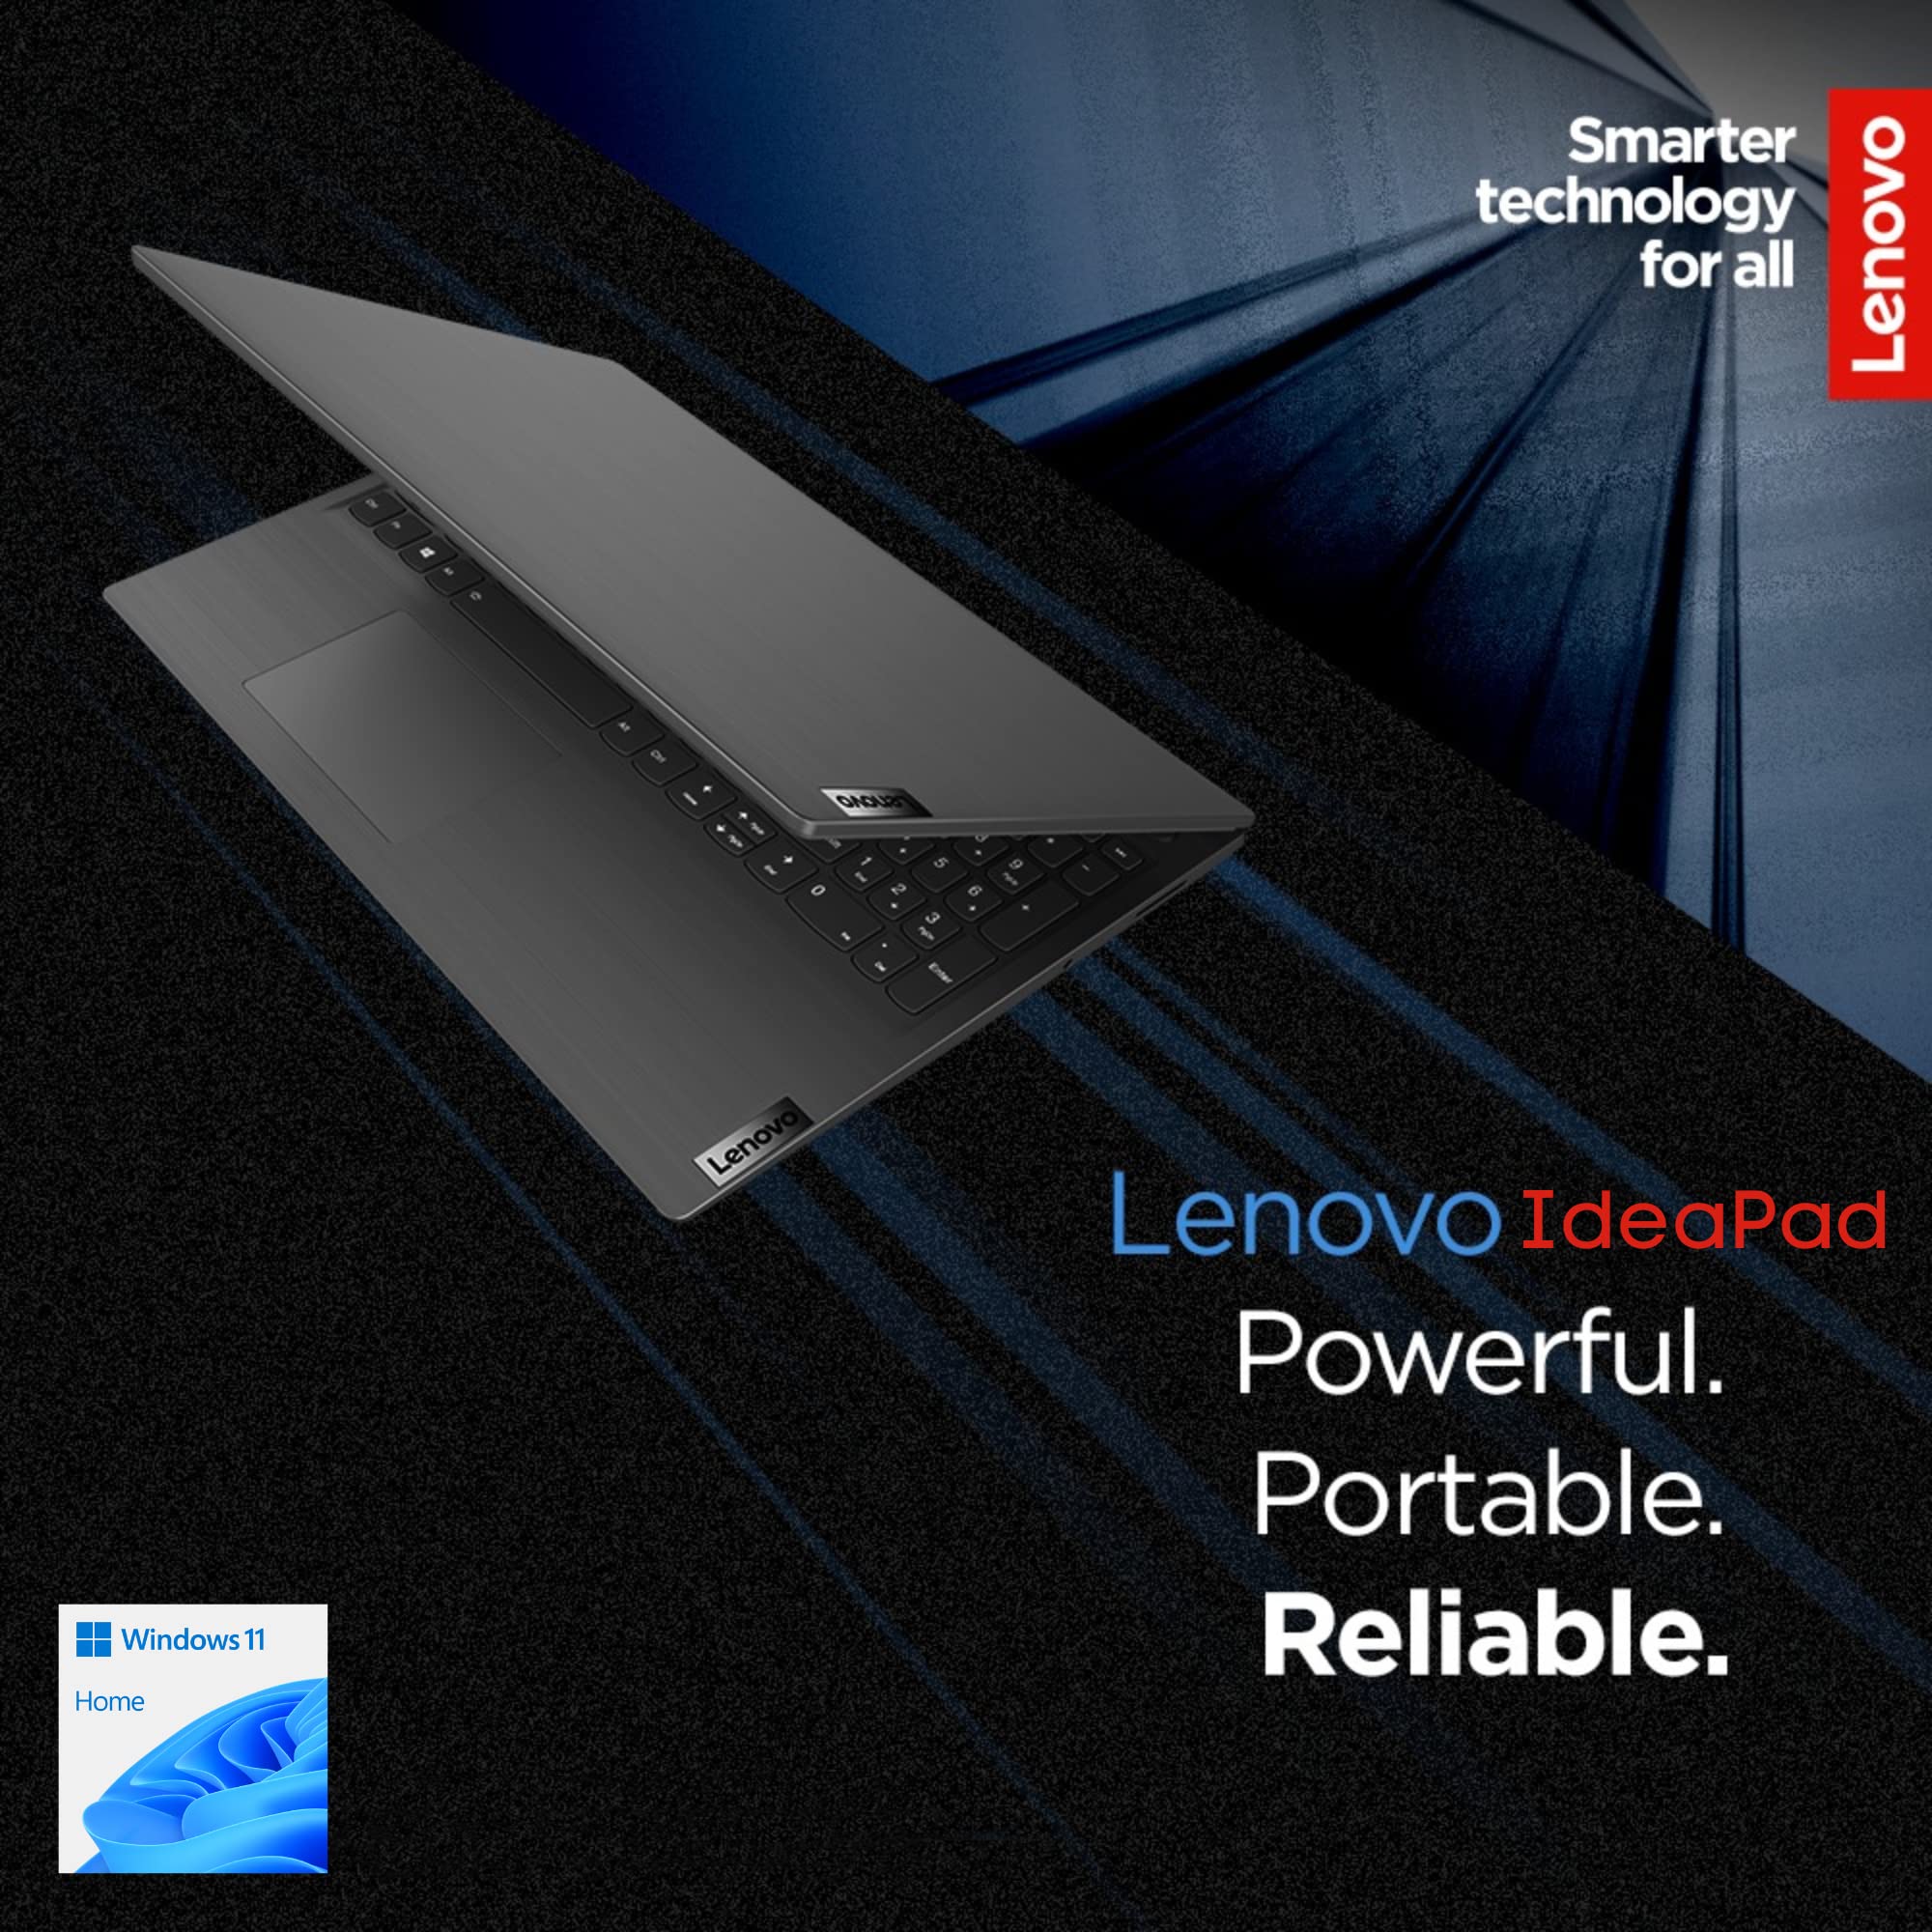 Lenovo IdeaPad, 20GB RAM, 1TB SSD, AMD Dual-core Processor, 15.6 Inch HD Anti-Glare Display, Long Battery Life Up to 9.5Hr, HDMI, SD Card Reader, Windows 11, 1 Year Microsoft 365